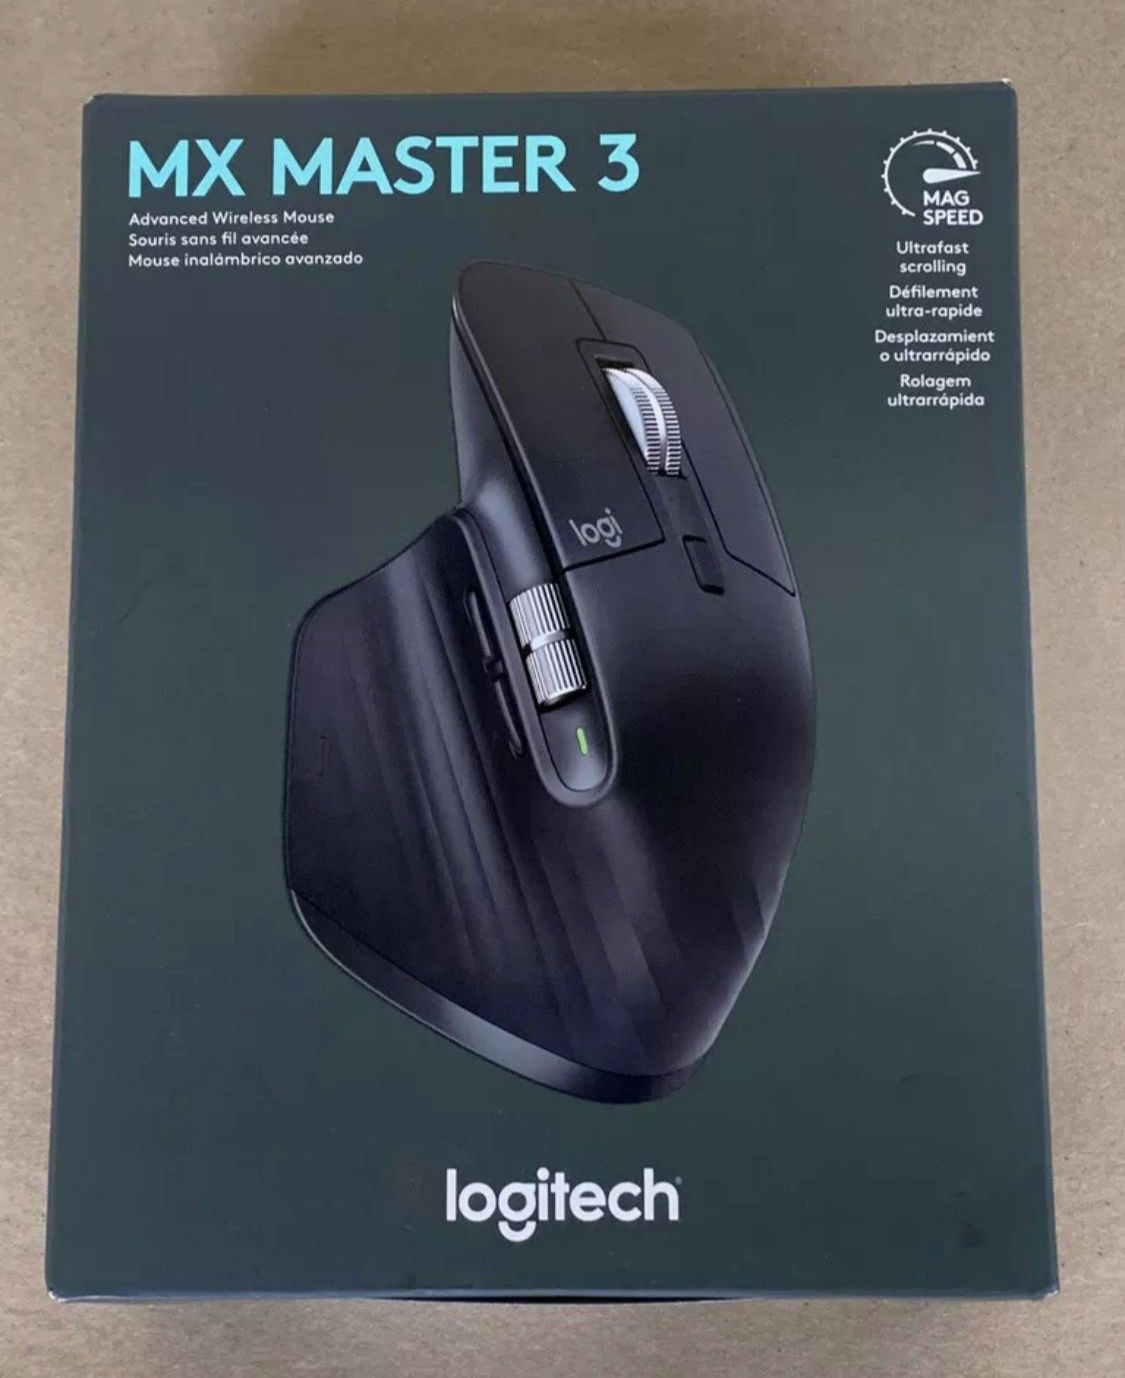 Brand new sealed in box MX Master 3 Logitech mouse latest model